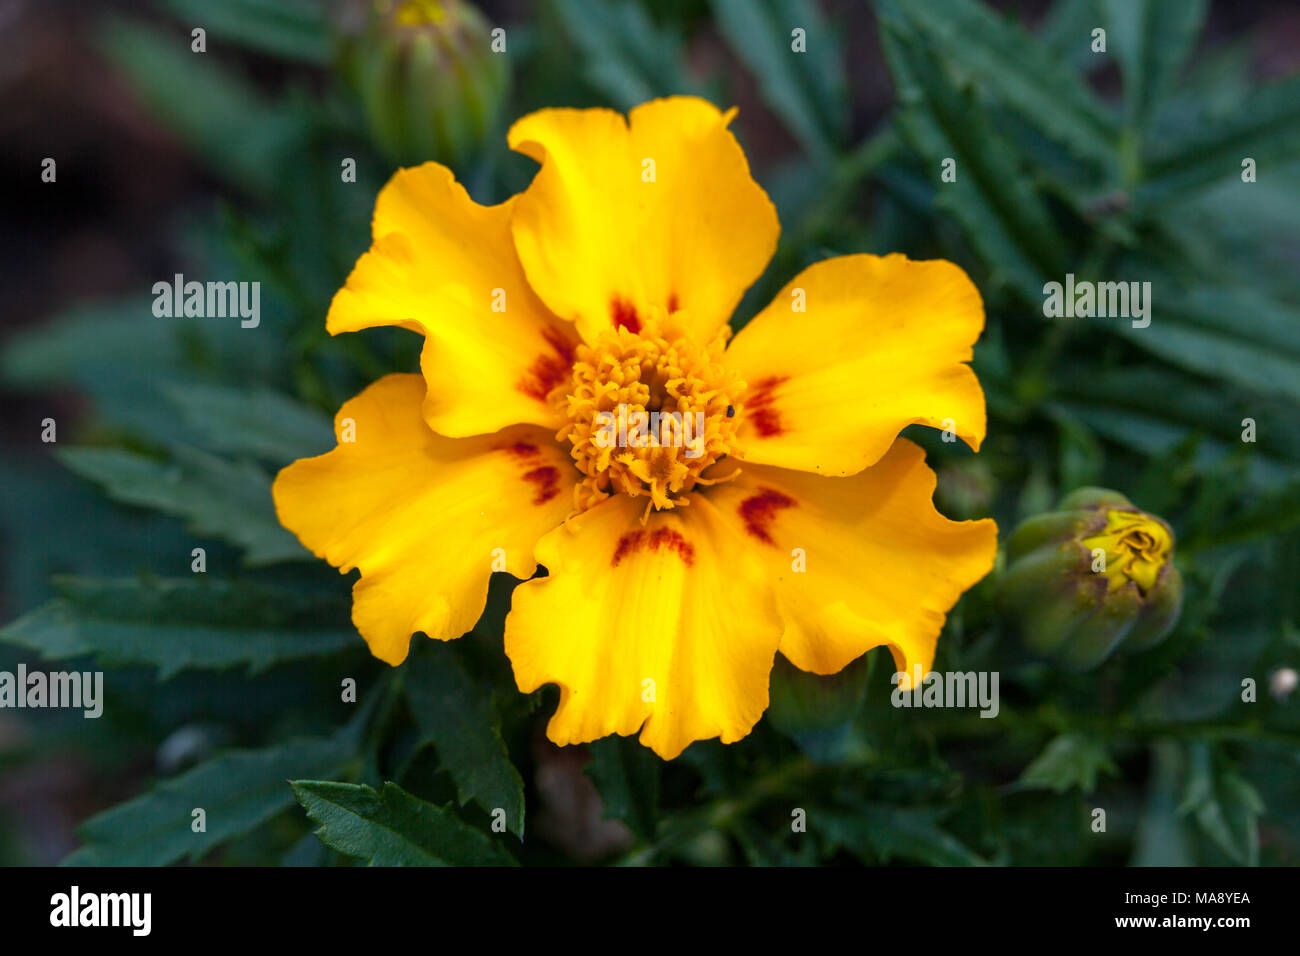 'Sylvia' French Marigold, Sammetsblomster (Tagetes patula) Stock Photo